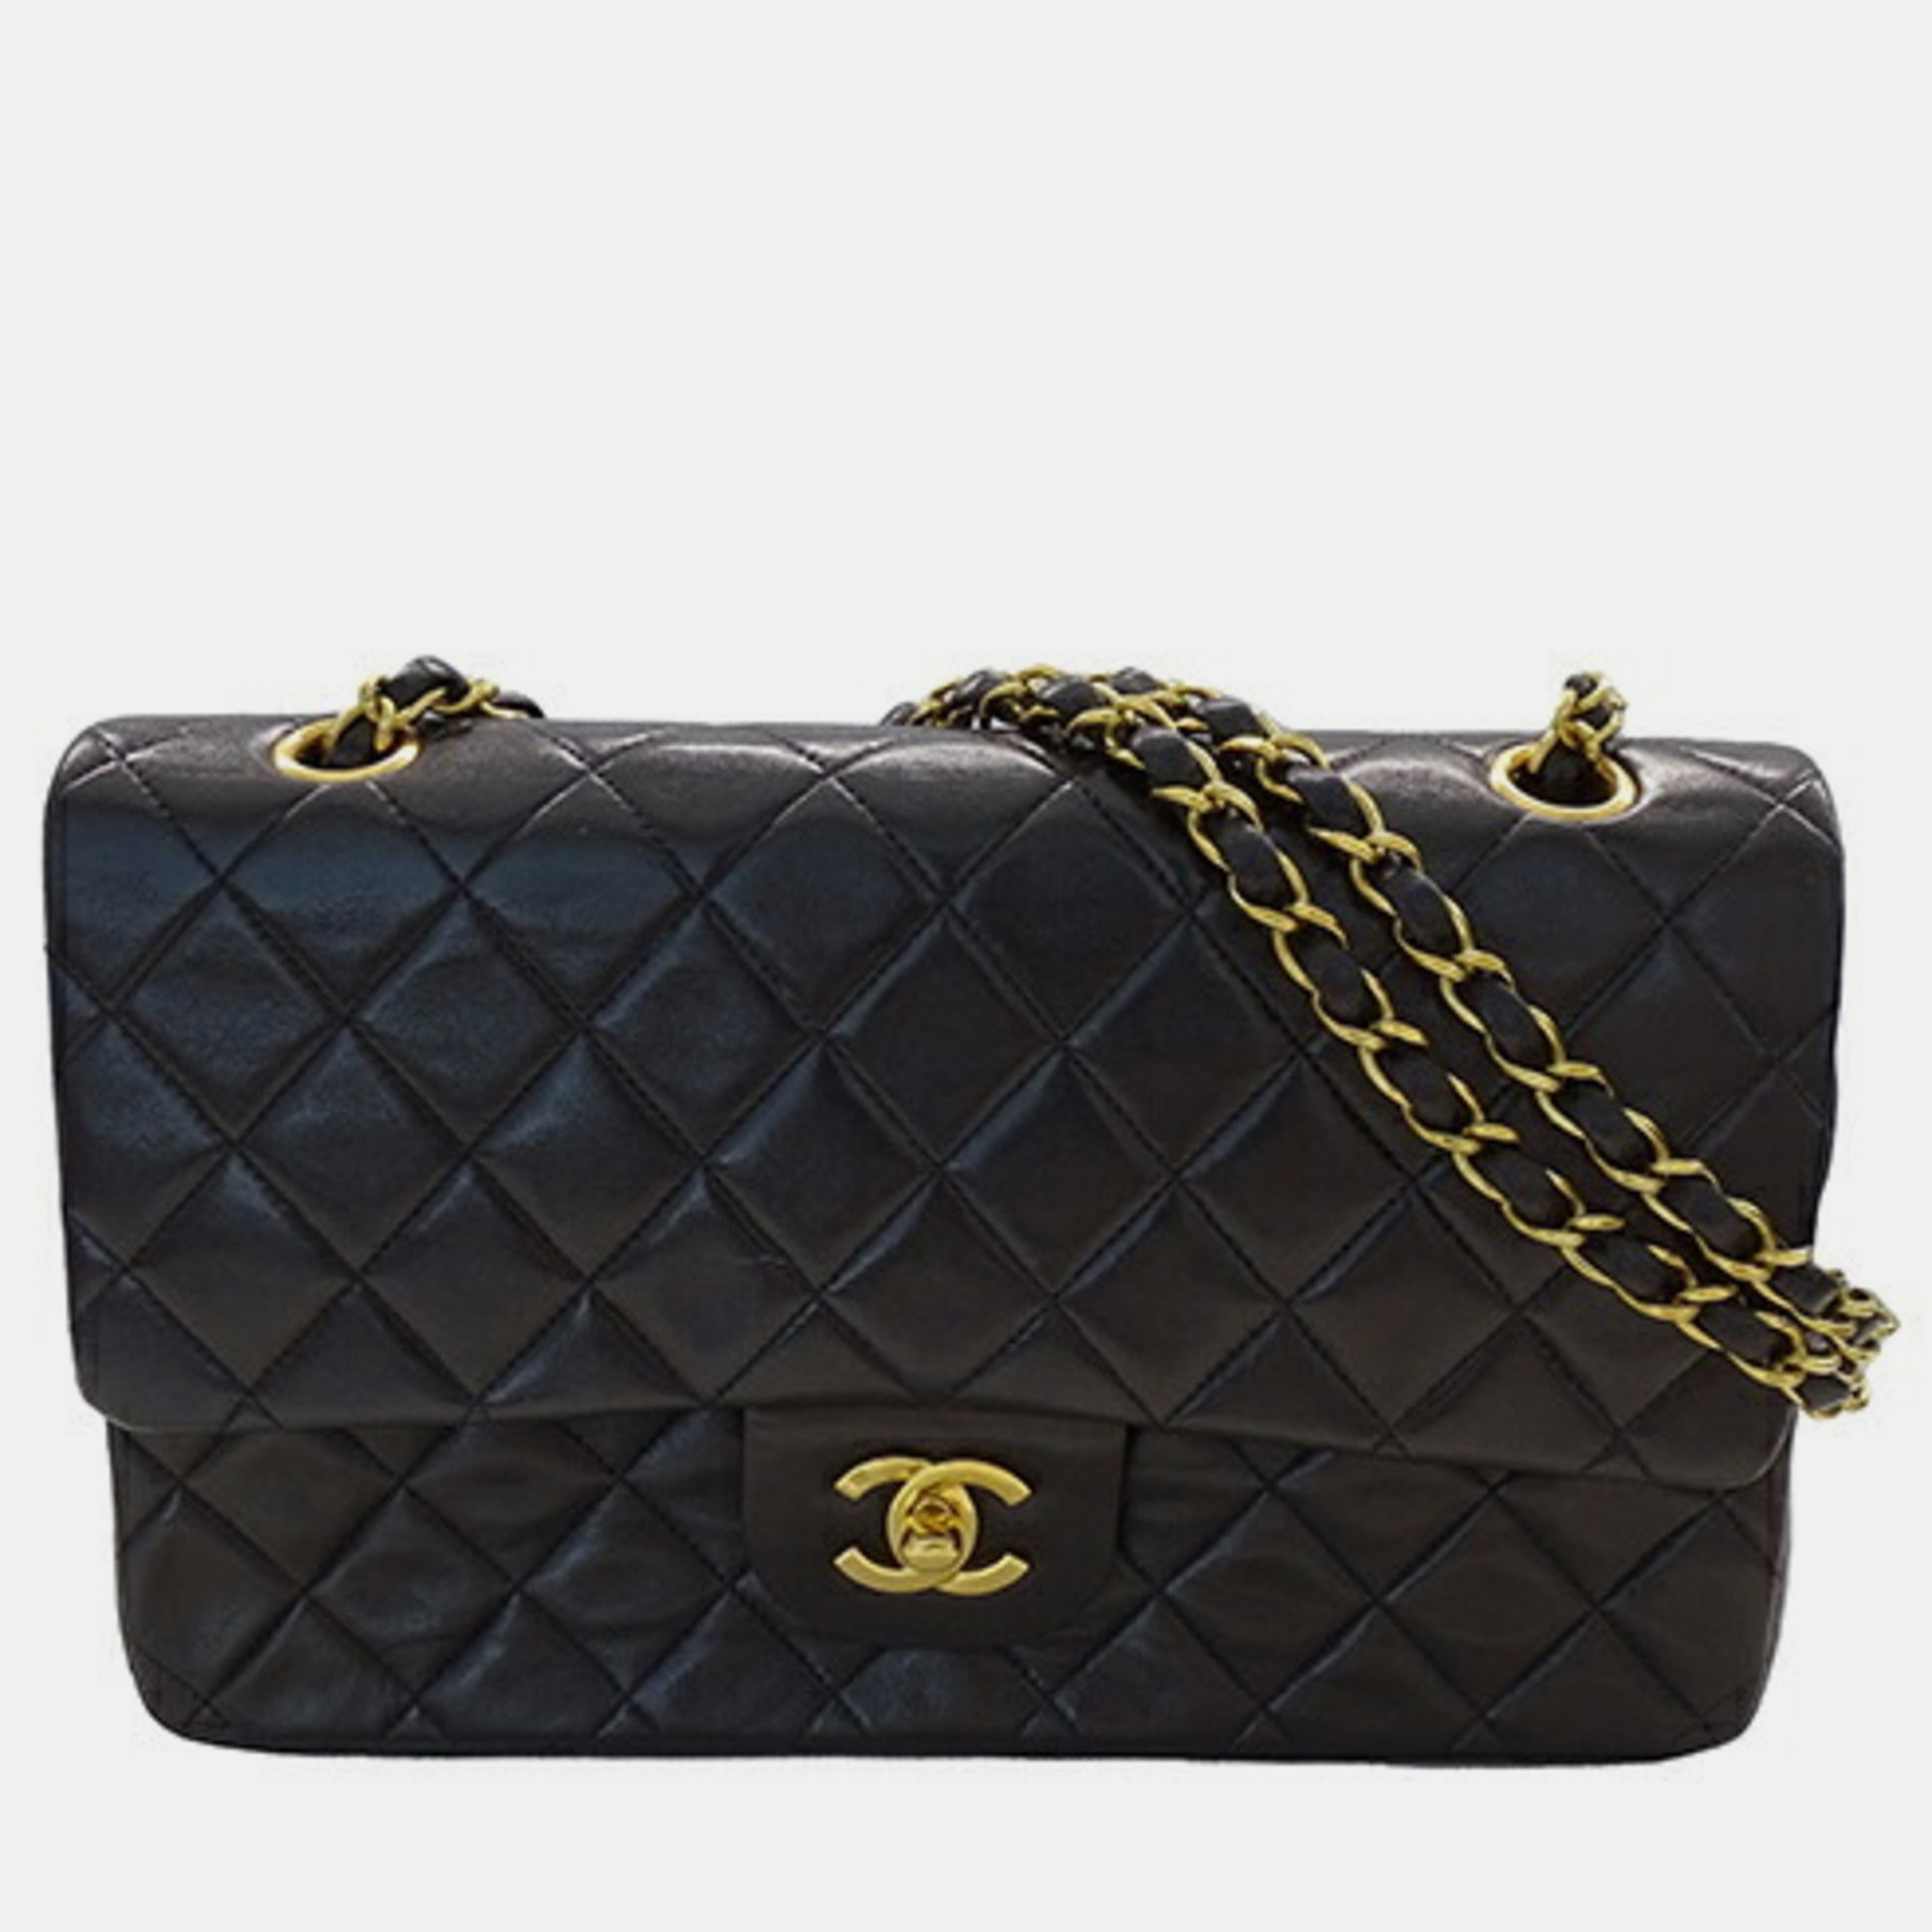 Chanel black lambskin leather medium classic double flap shoulder bags